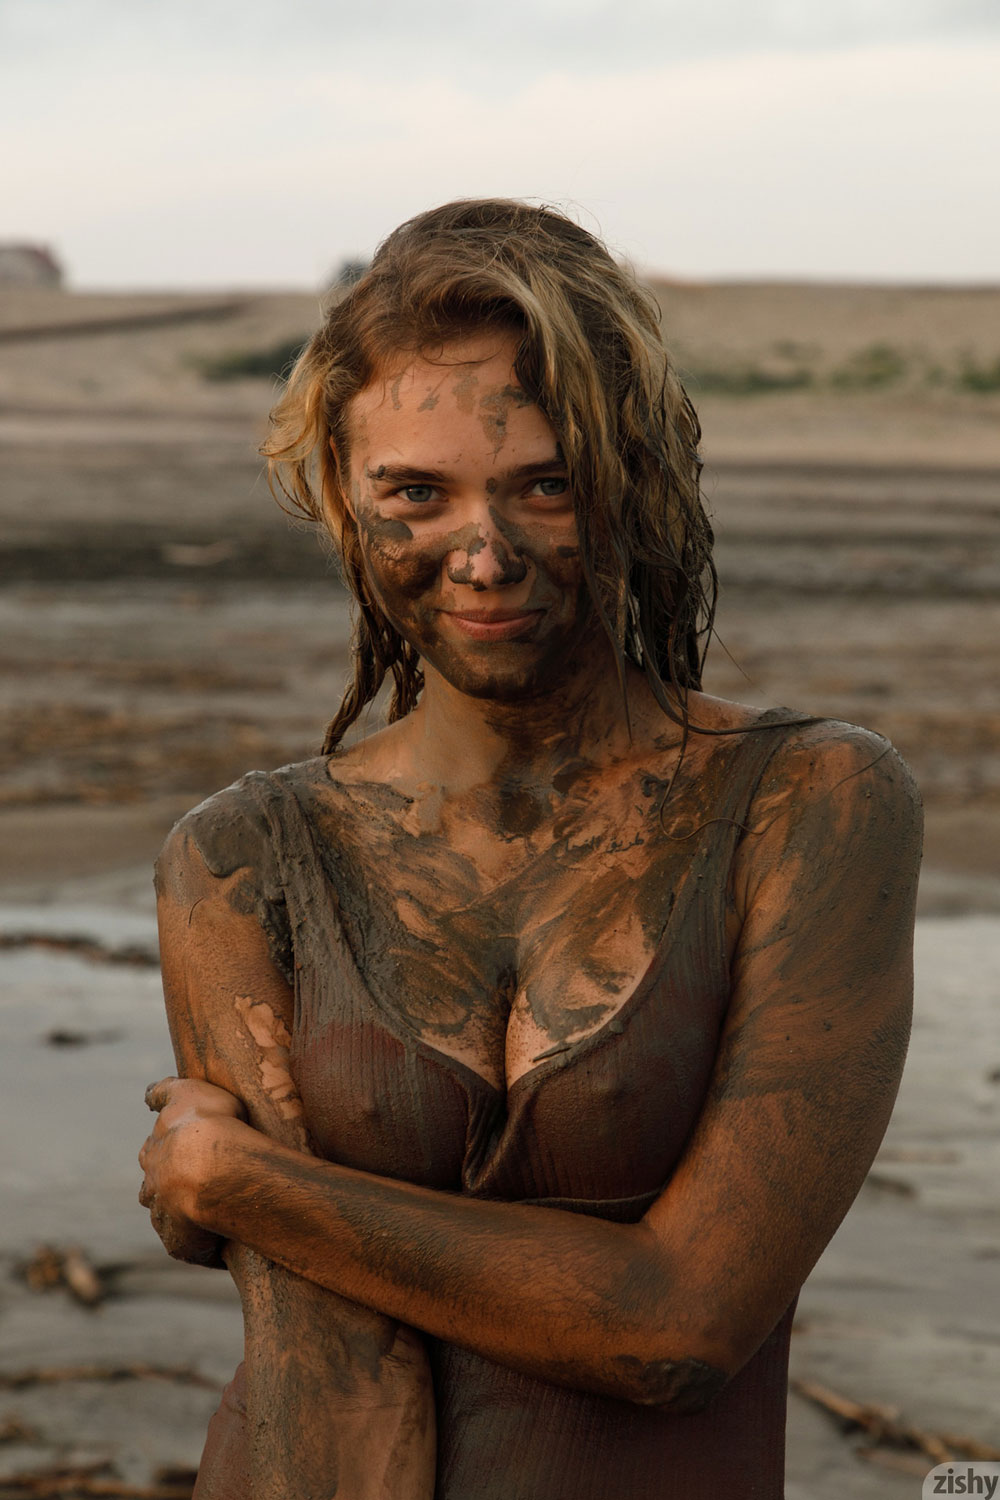 Nude Muddy Girls